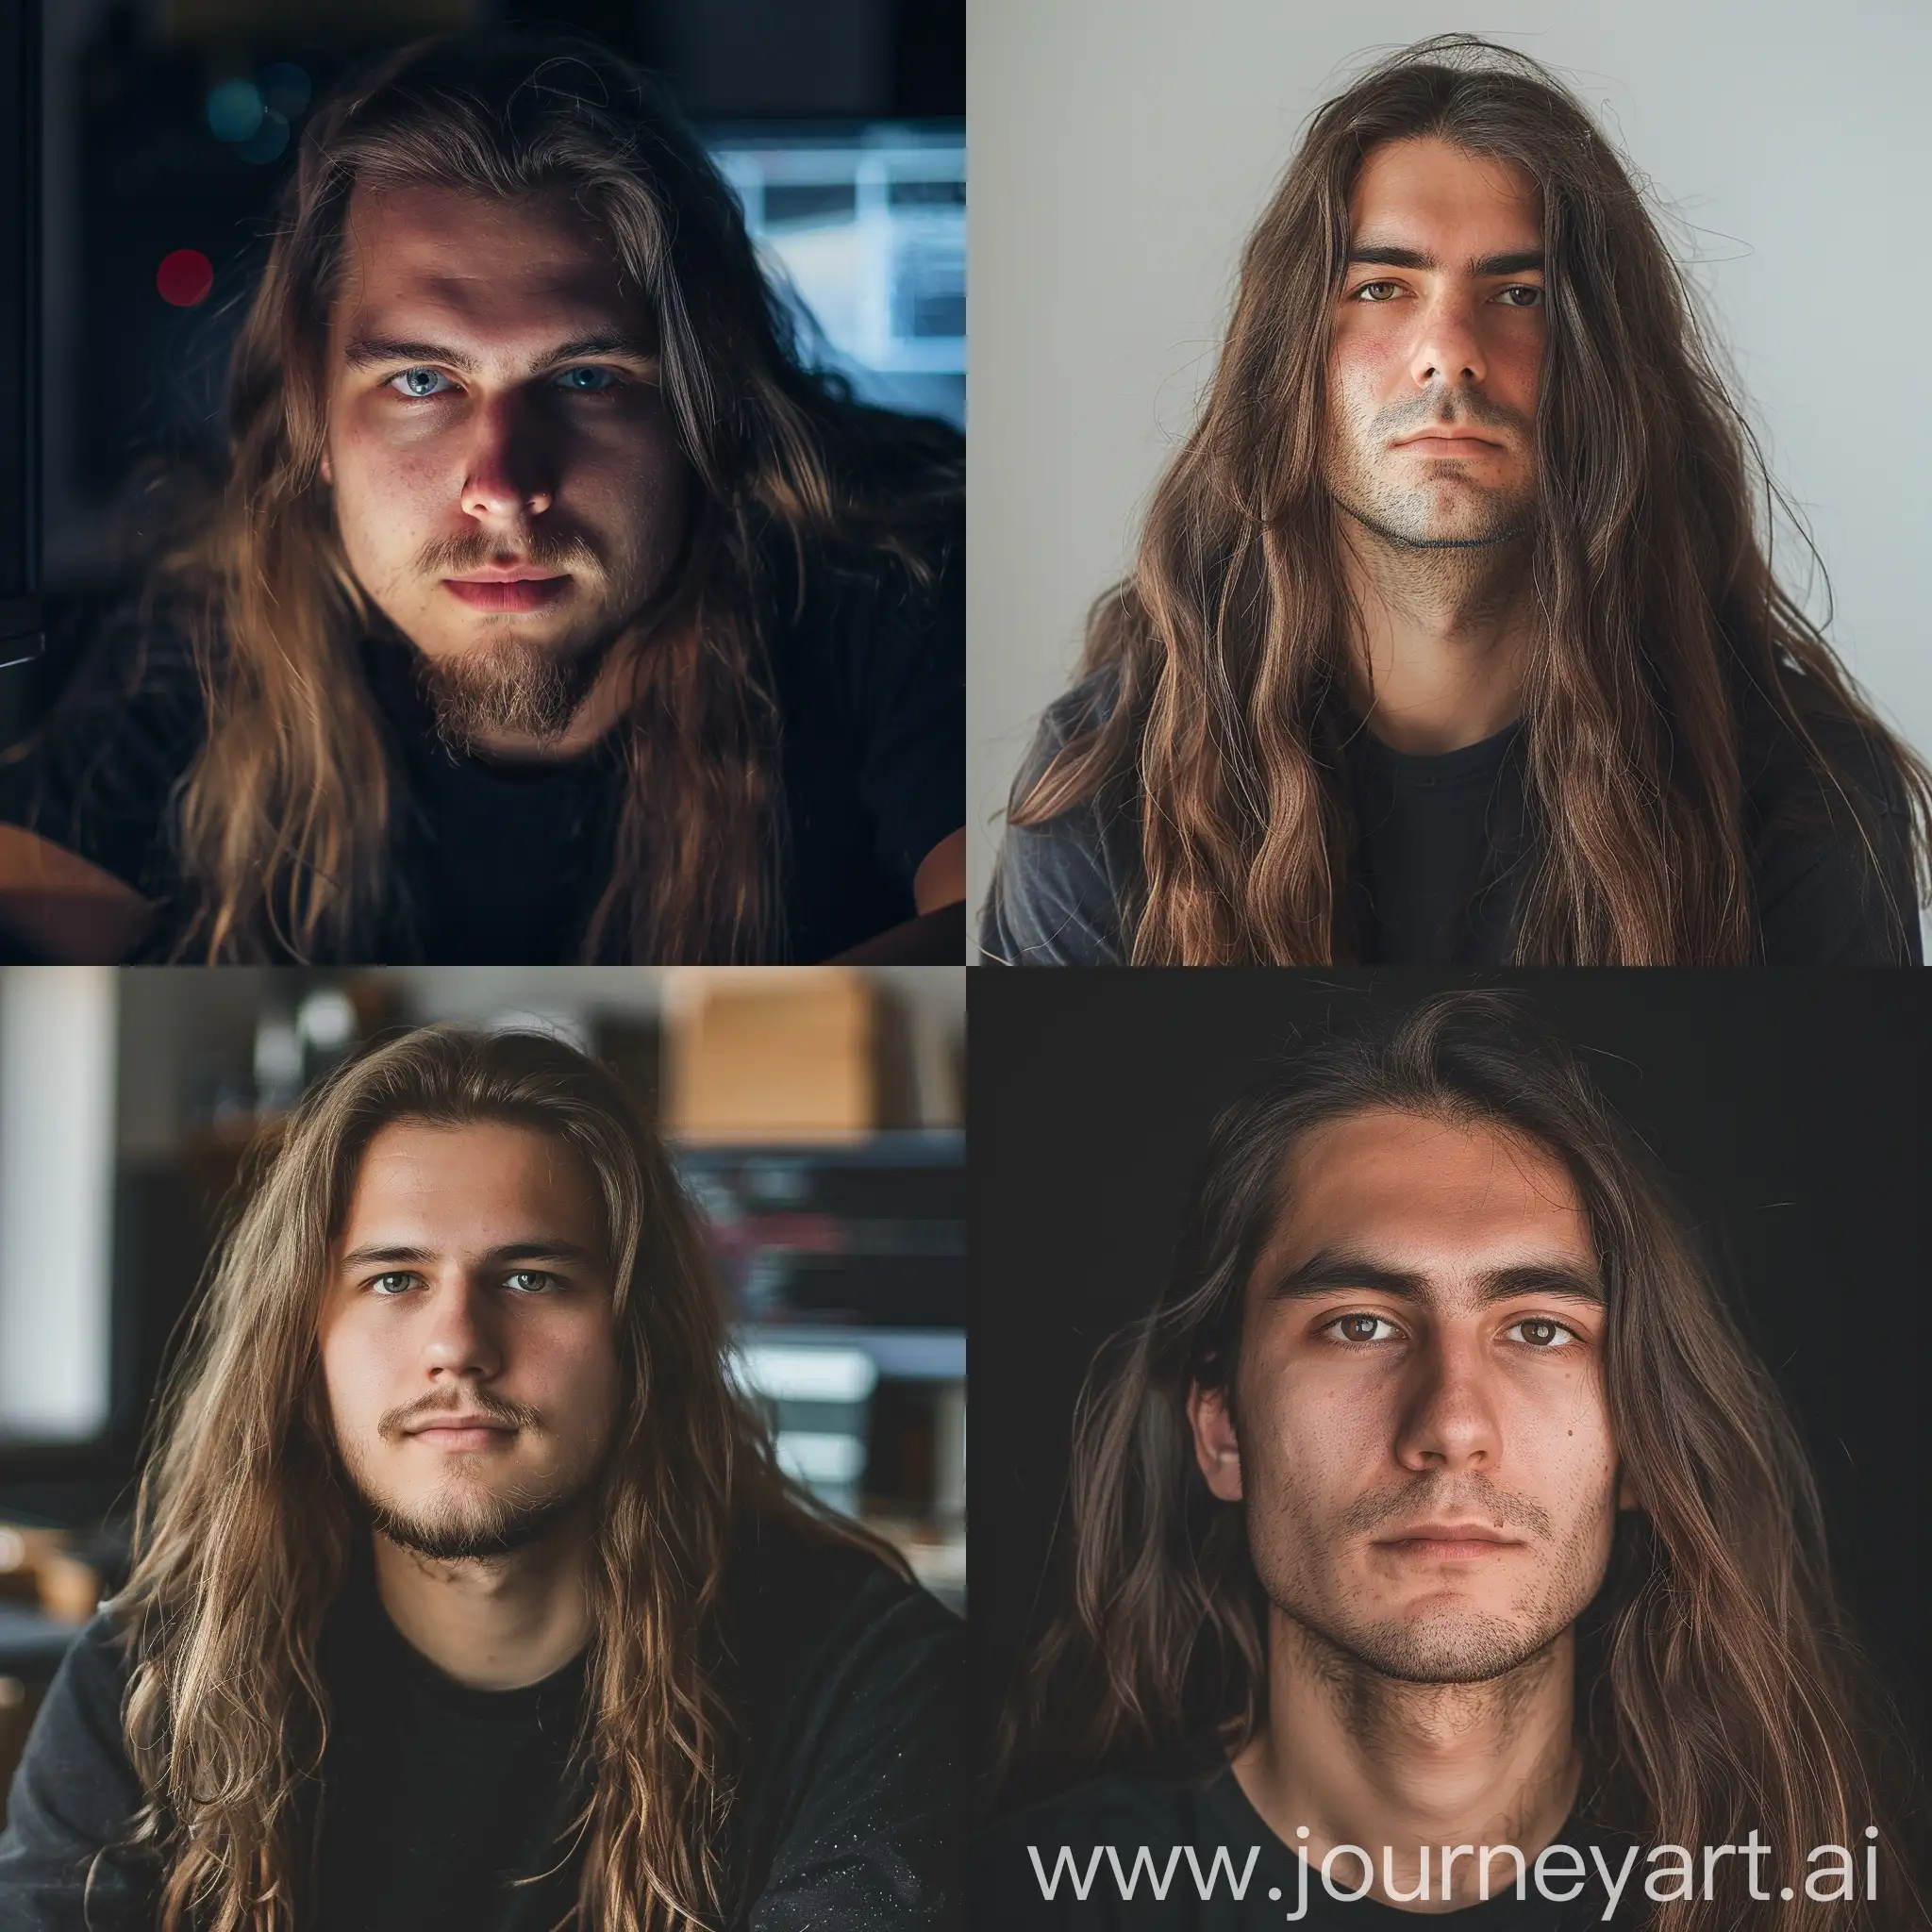 slavic man programer with long hair
